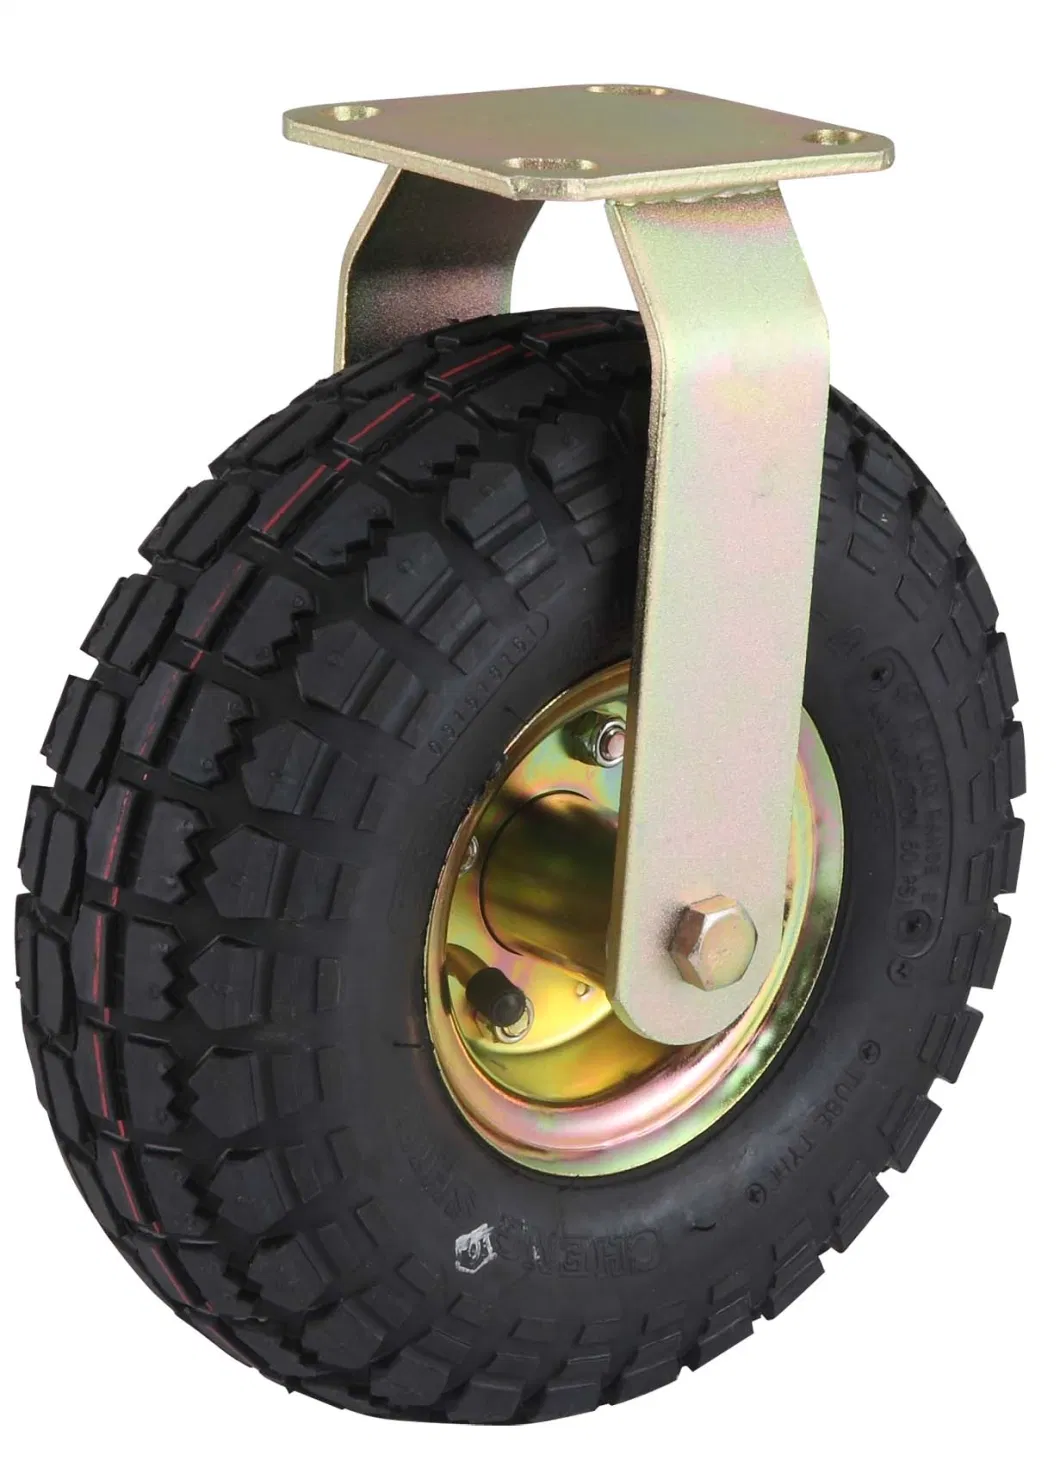 Wholesale Small Pneumatic Rubber Tire Wheel Barrow Wheel